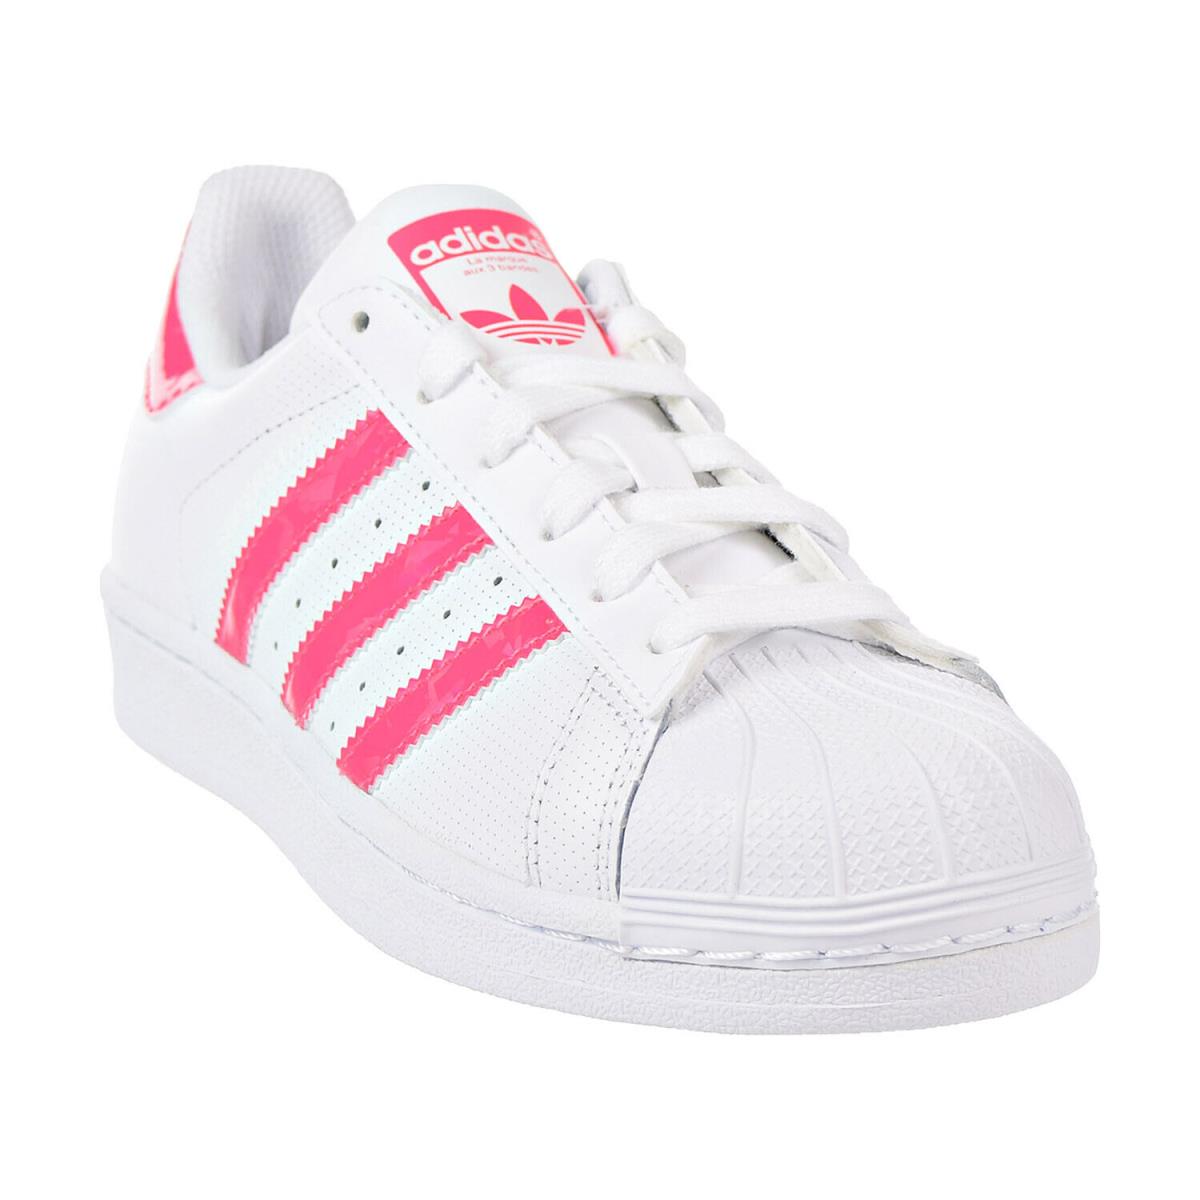 Adidas Superstar J Big Kids` Running Shoes Ft White-reapnk-ftwhite DB1210